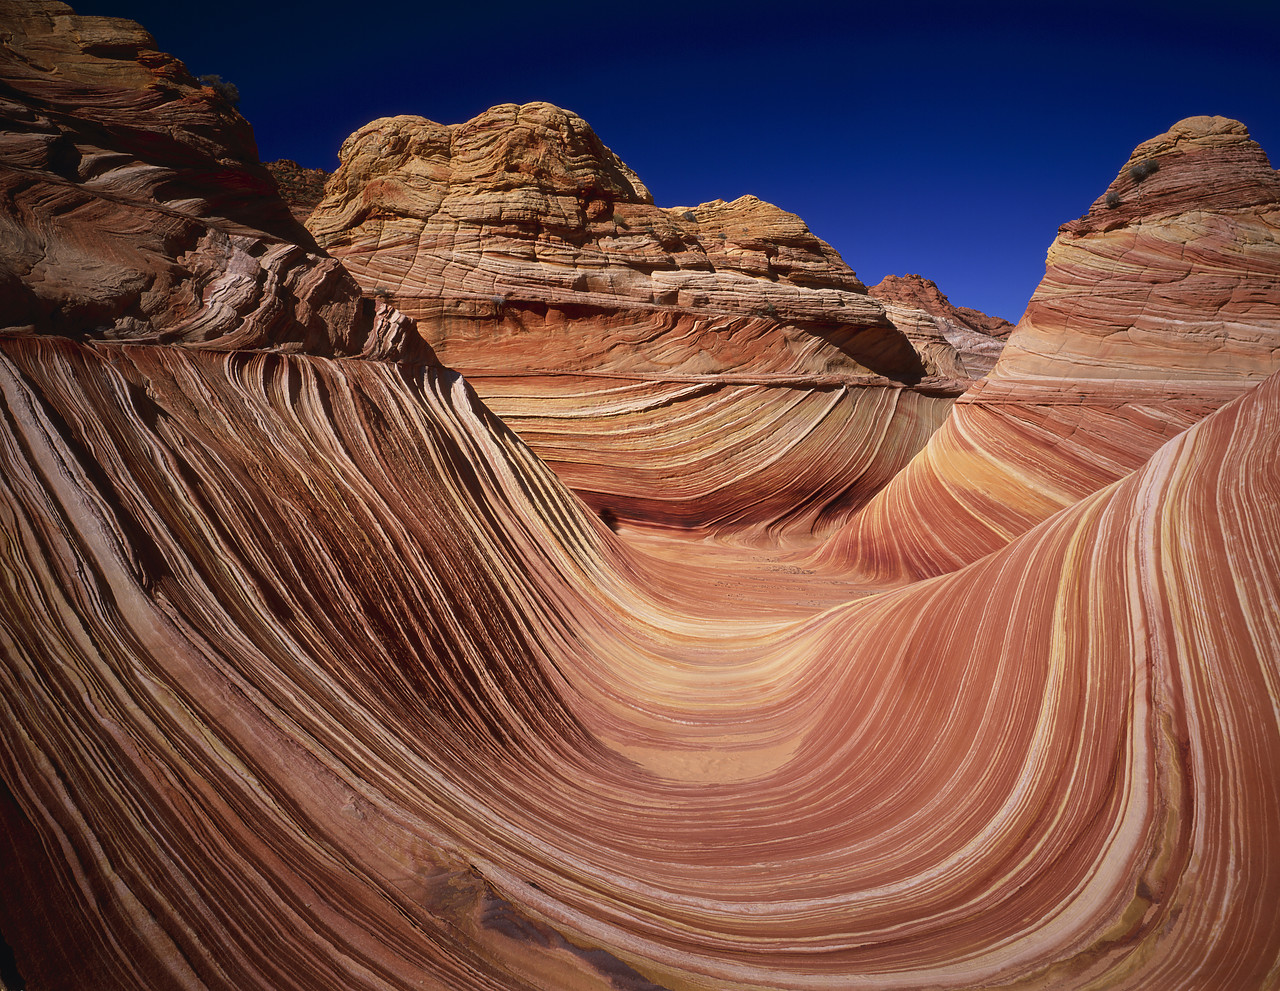 #966205-3 - The Sandstone Wave, Paria Canyon, Arizona, USA